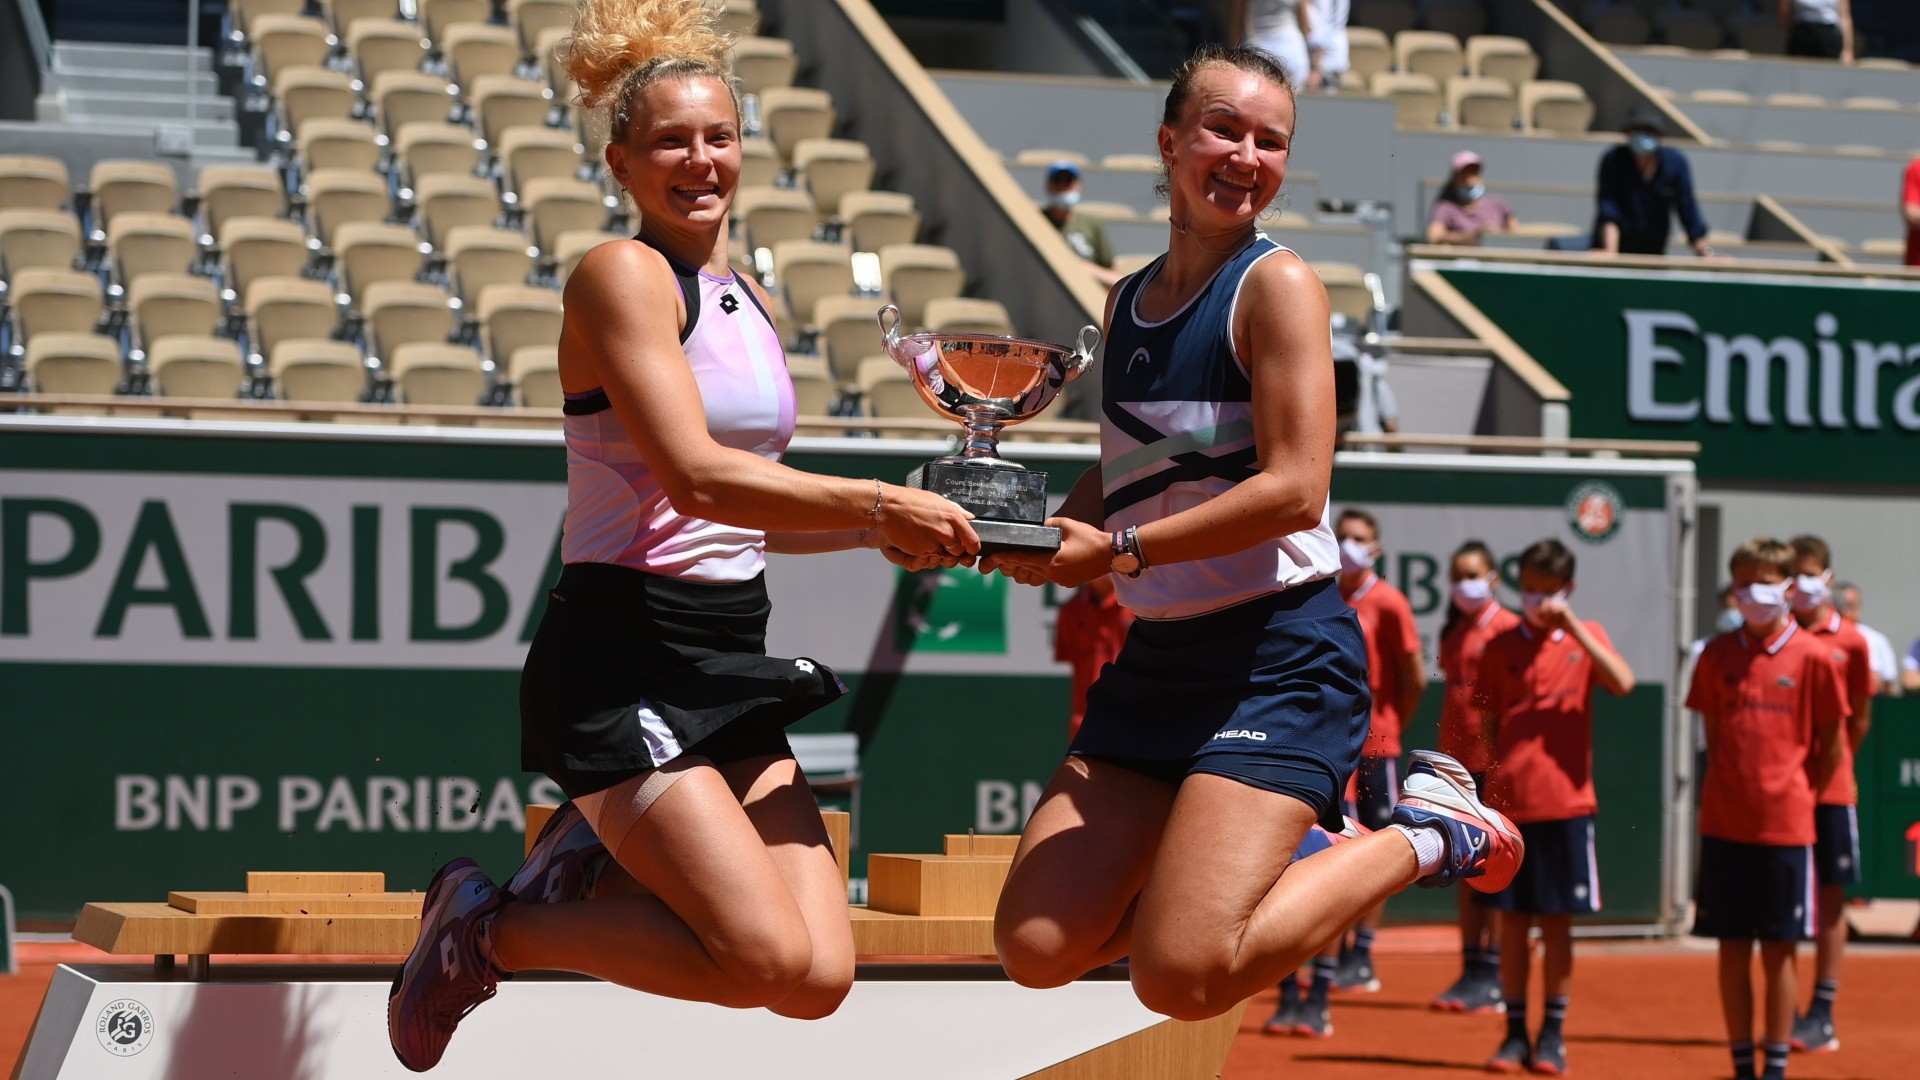 Barbora Krejcikova and Katerina Siniakova with their trophy (Image credit: Twitter@rolandgarros)